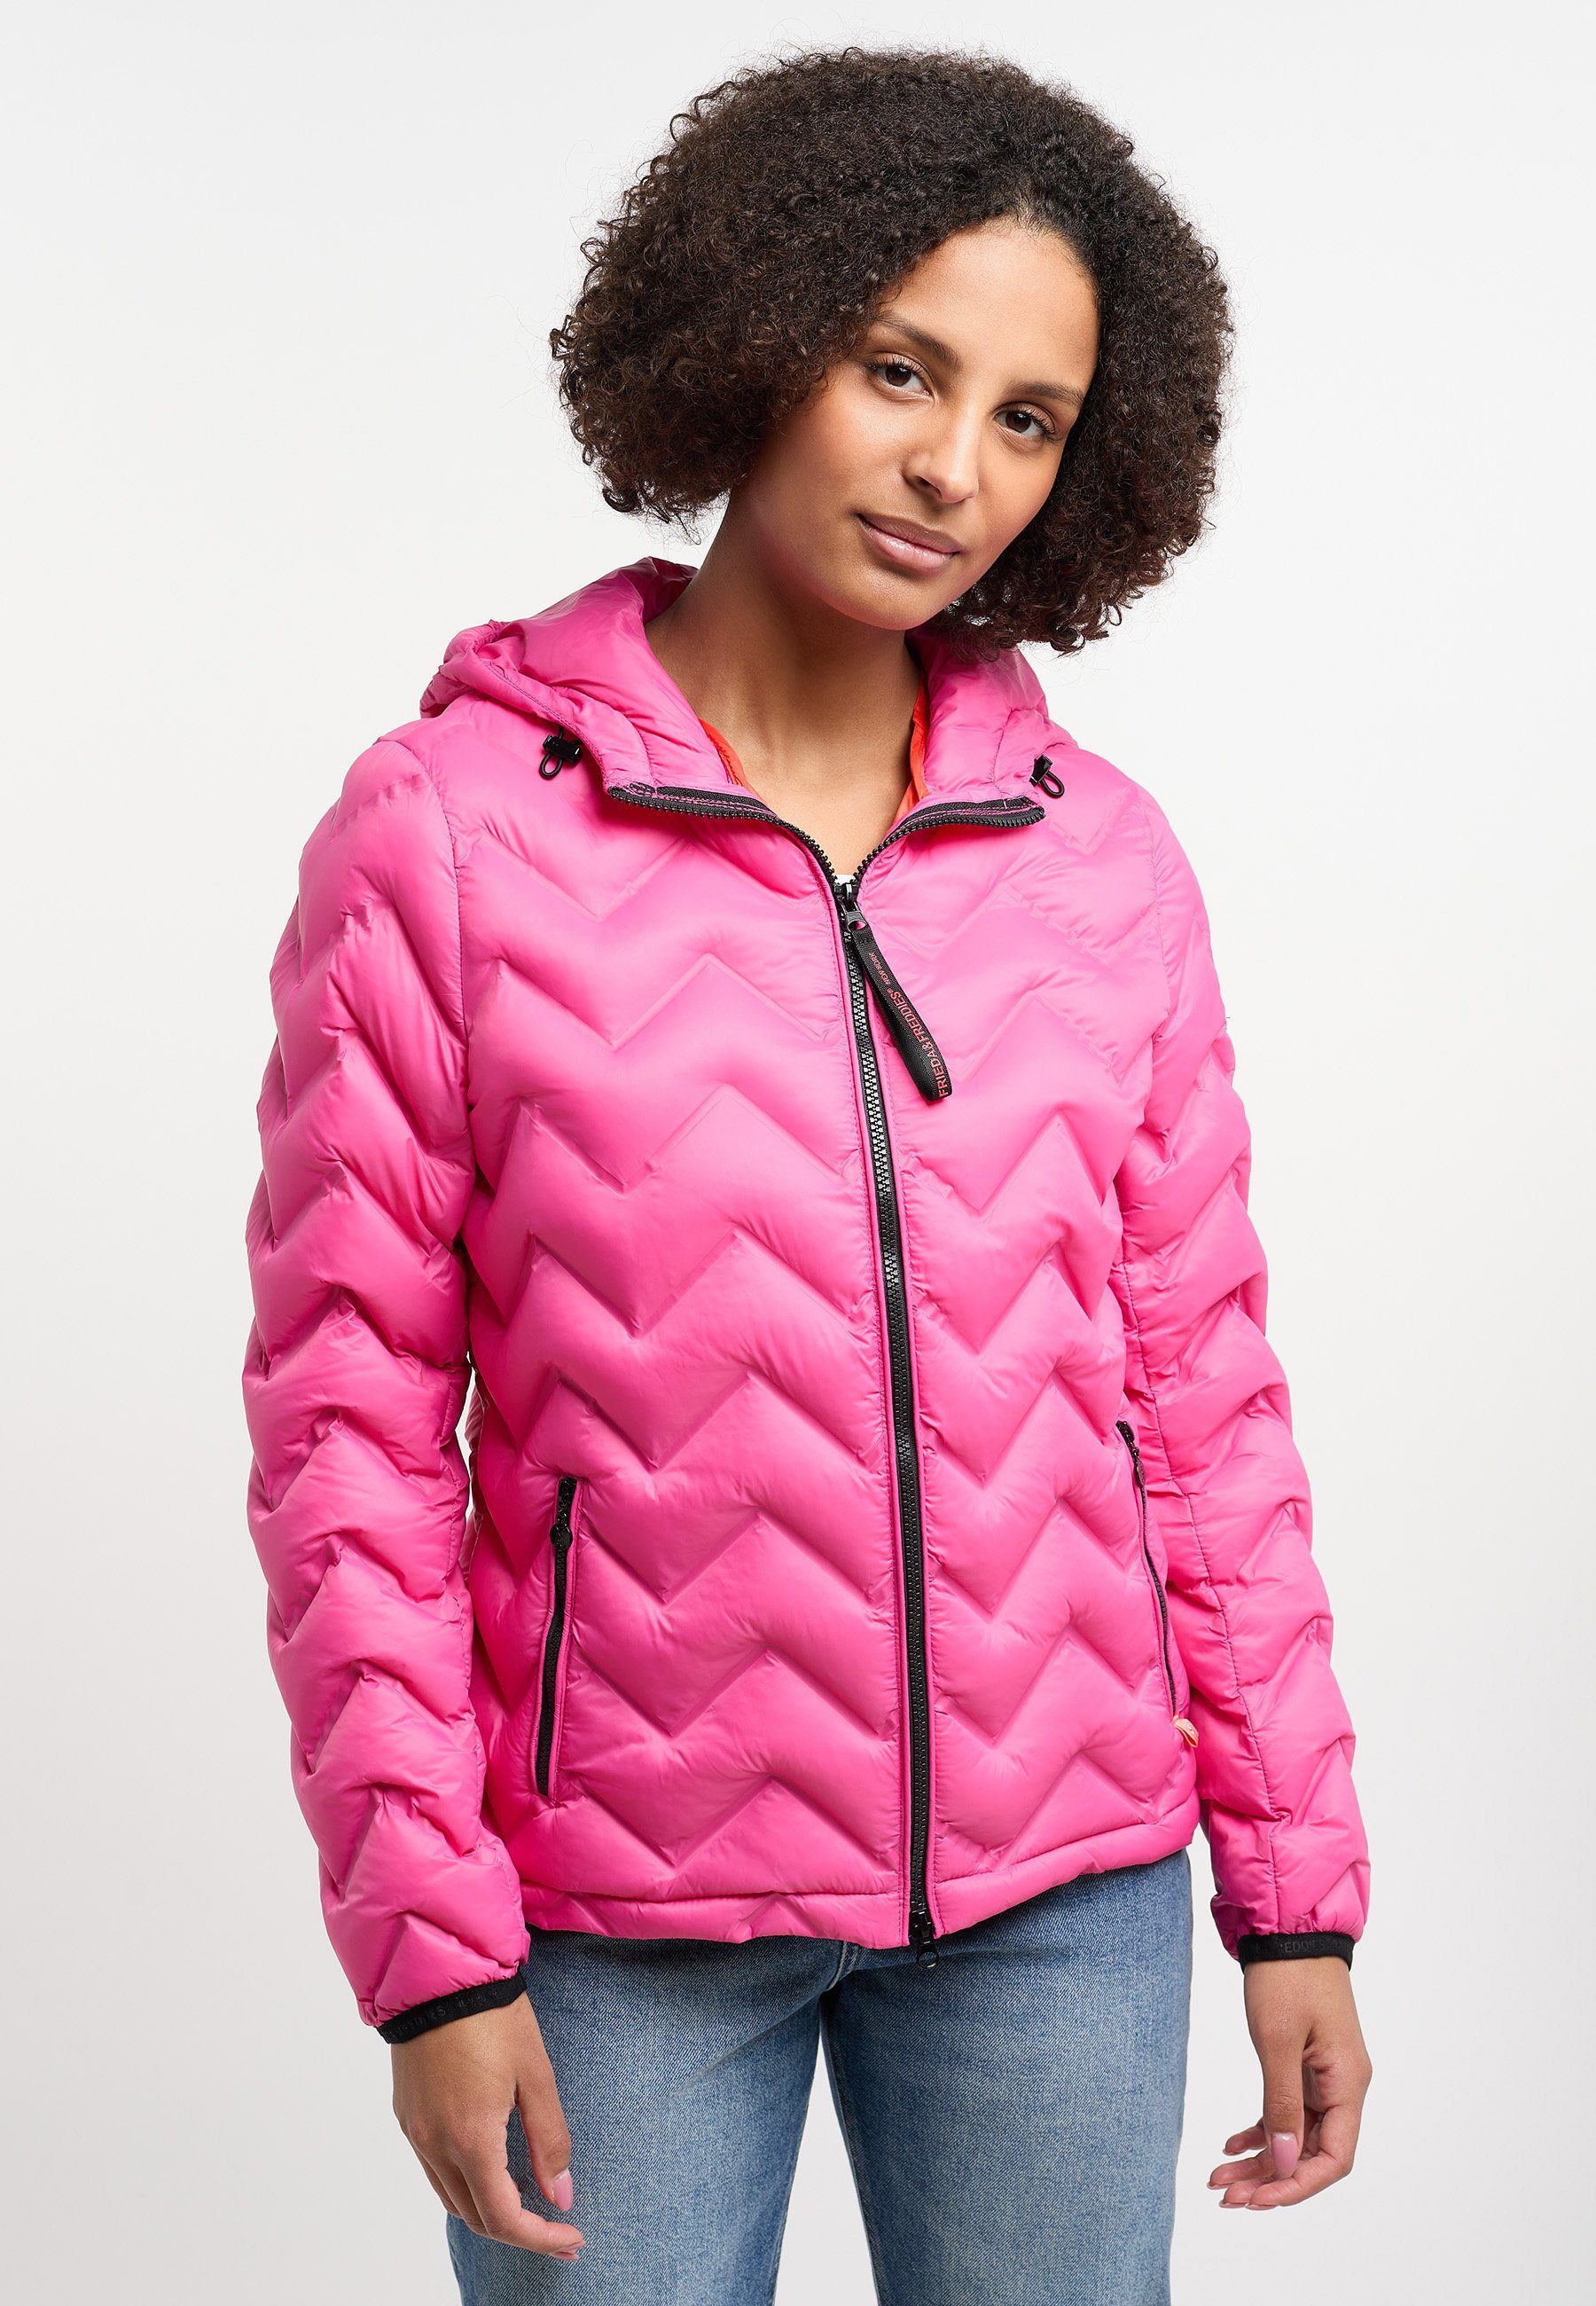 Frieda & Freddies NY Steppjacke pink Thermolite mit Reißverschluss Mailynn Jacket